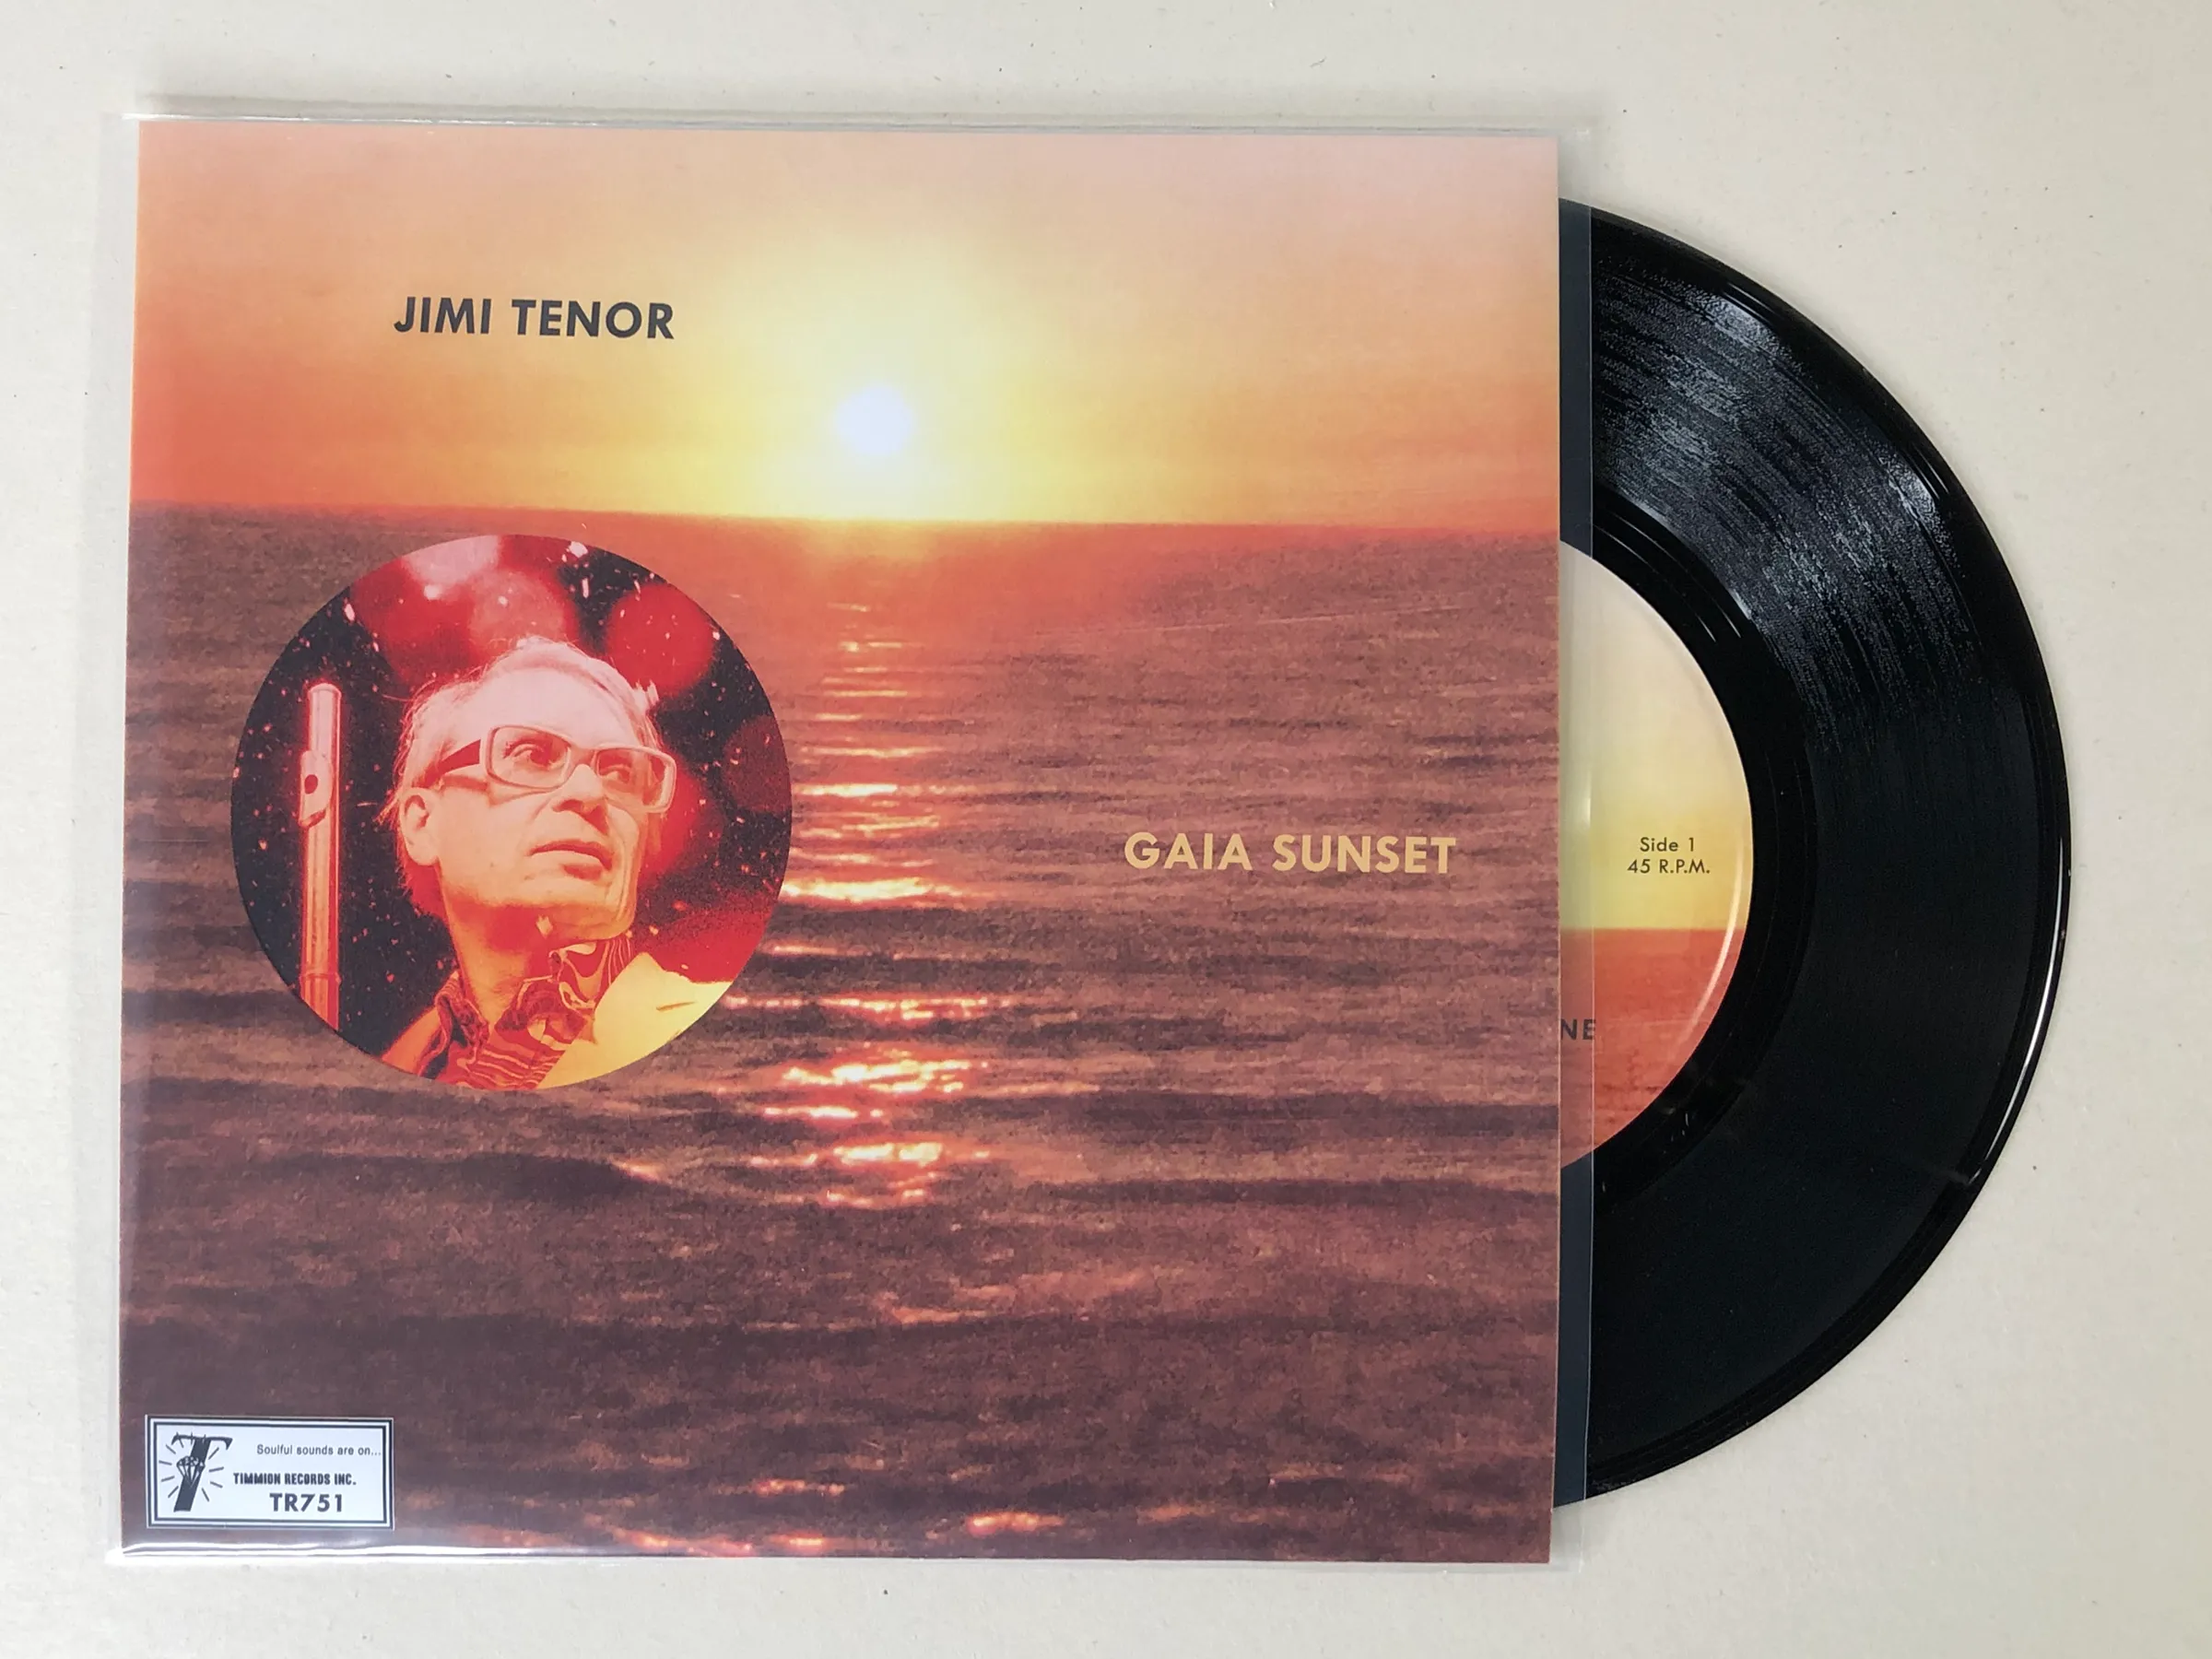 Jimi Tenor & Cold Diamond & Mink - Gaia Sunset | NEWTONE RECORDS